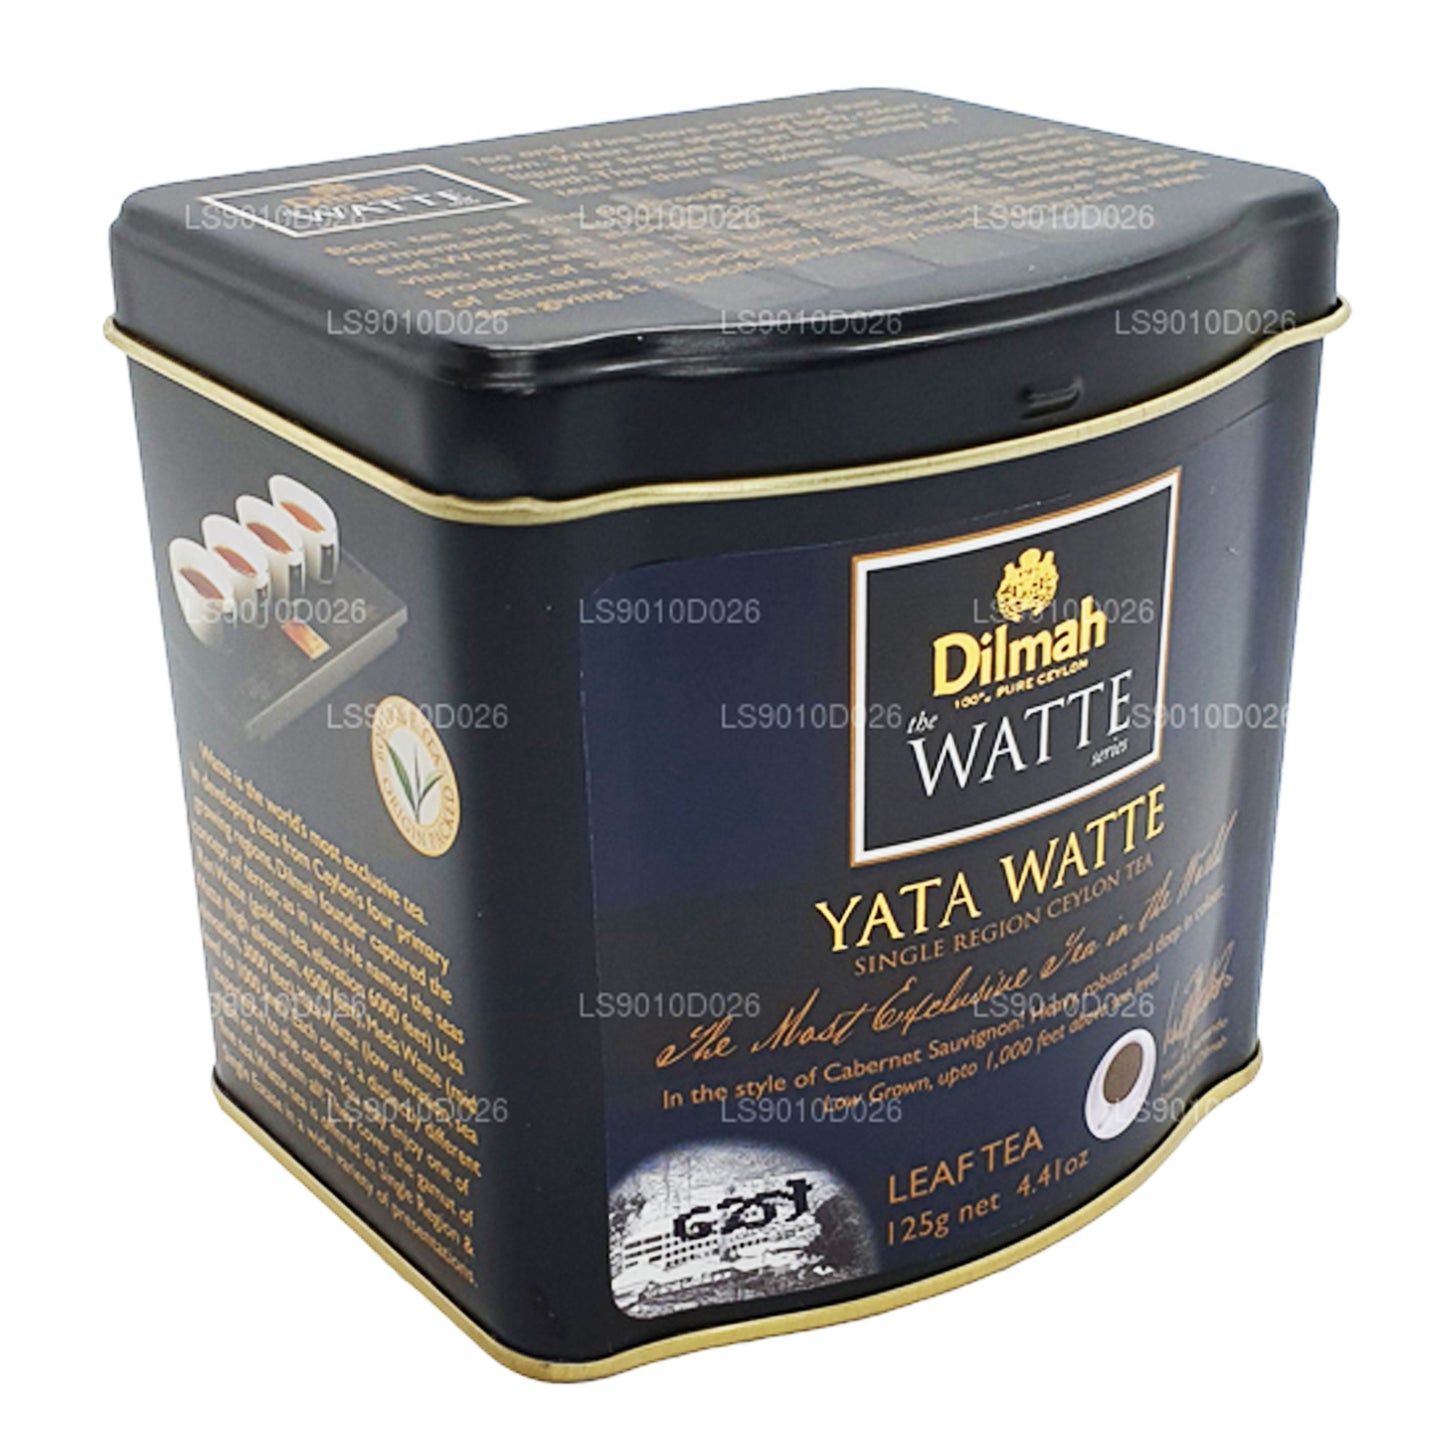 Dilmah Yata Watte Loose Leaf Tea (125g)